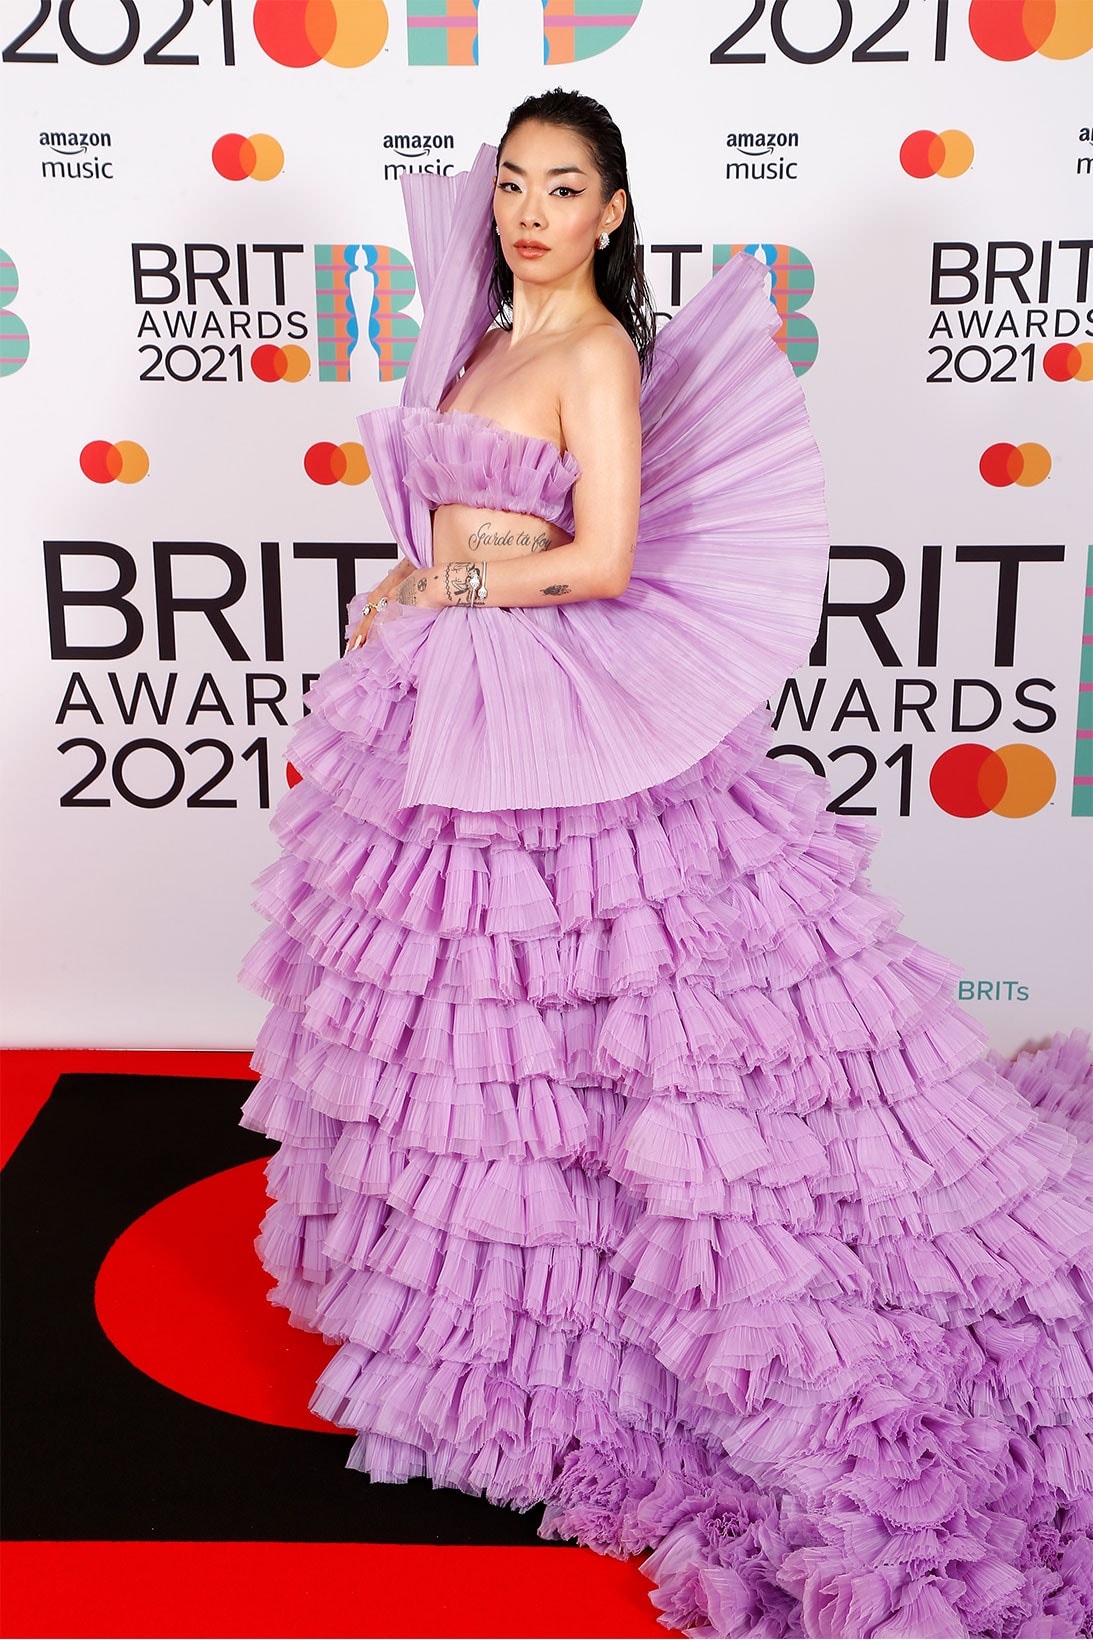 brit awards 2021 red carpet best dressed celebrities rina sawayama balmain